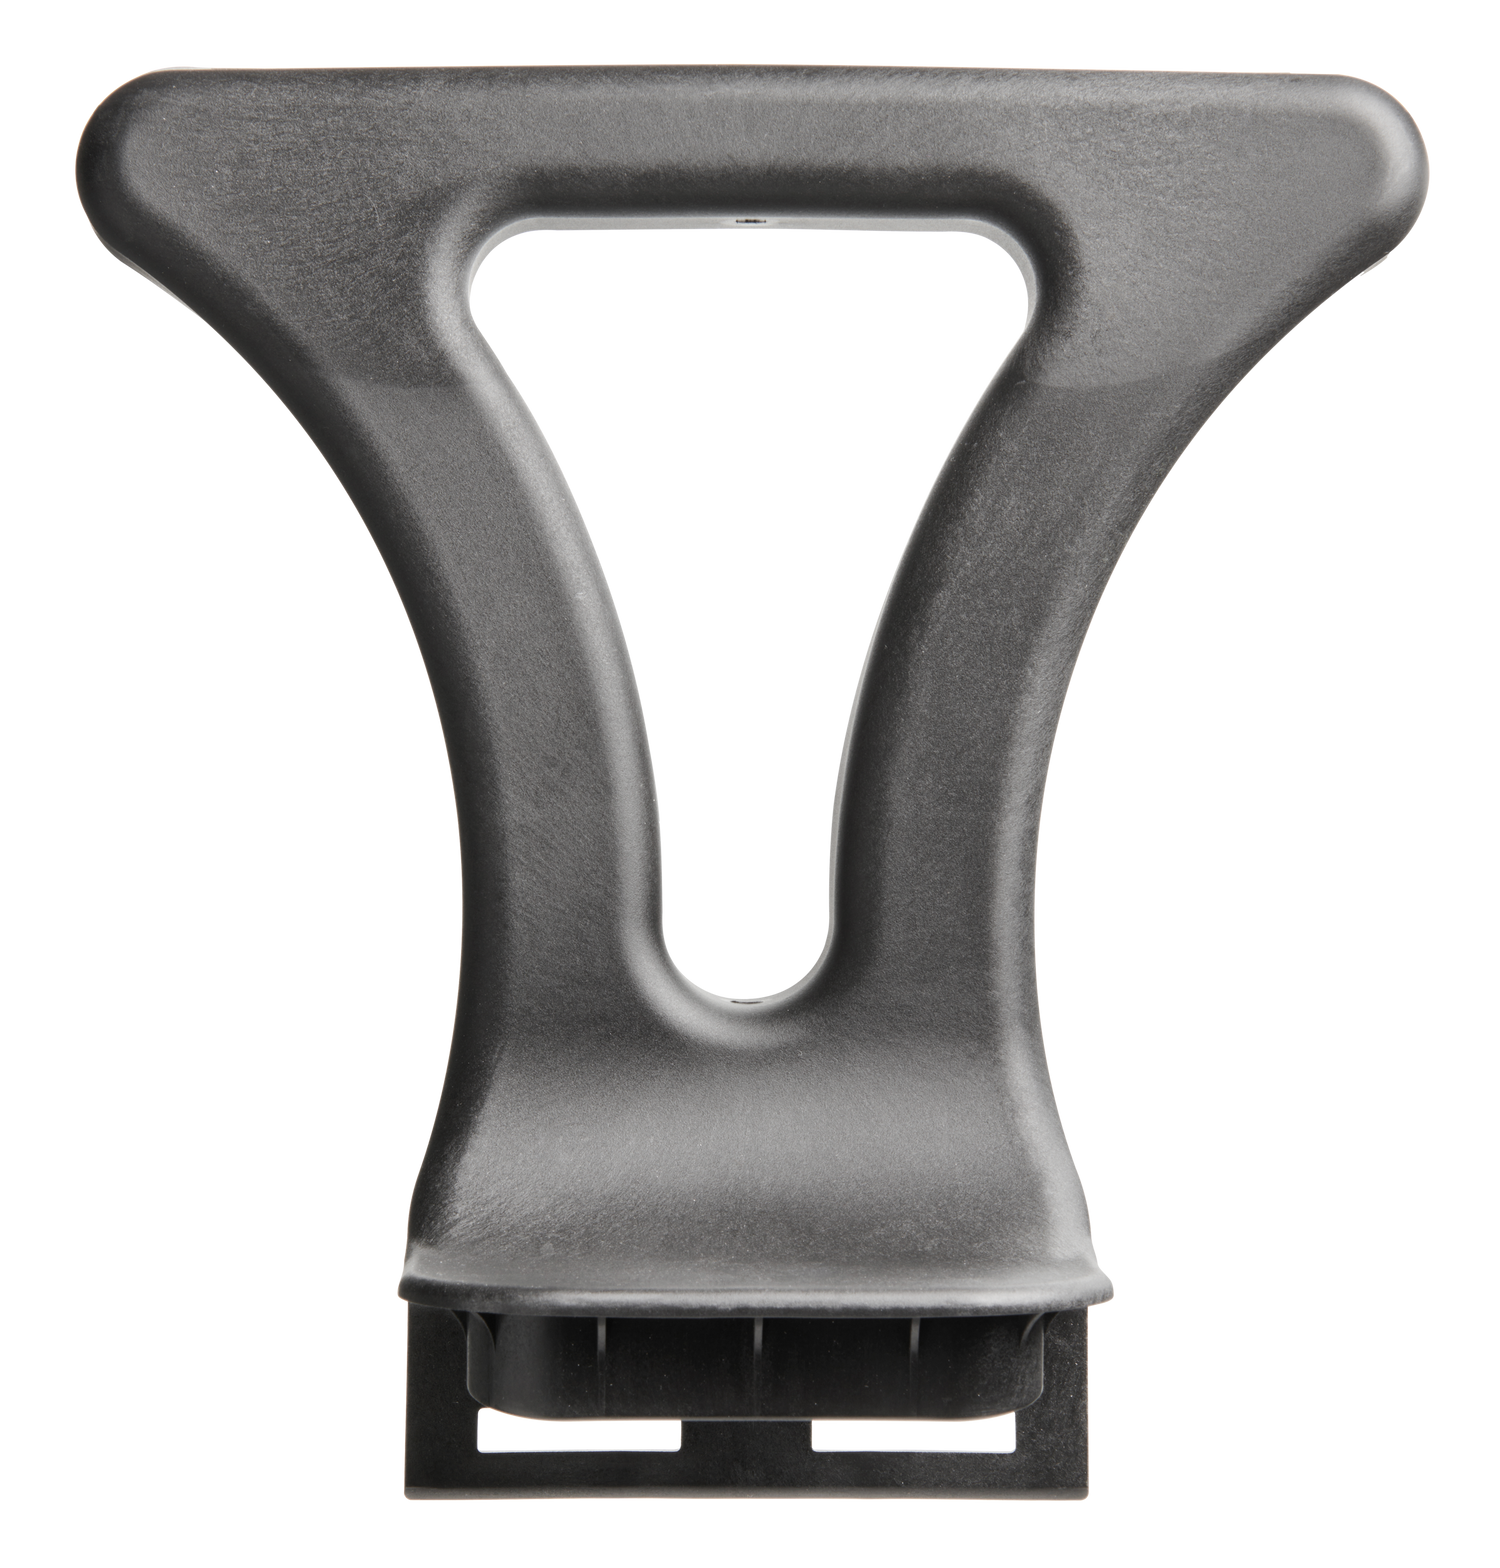 SecuCare Quattro armrest for shower chair, black